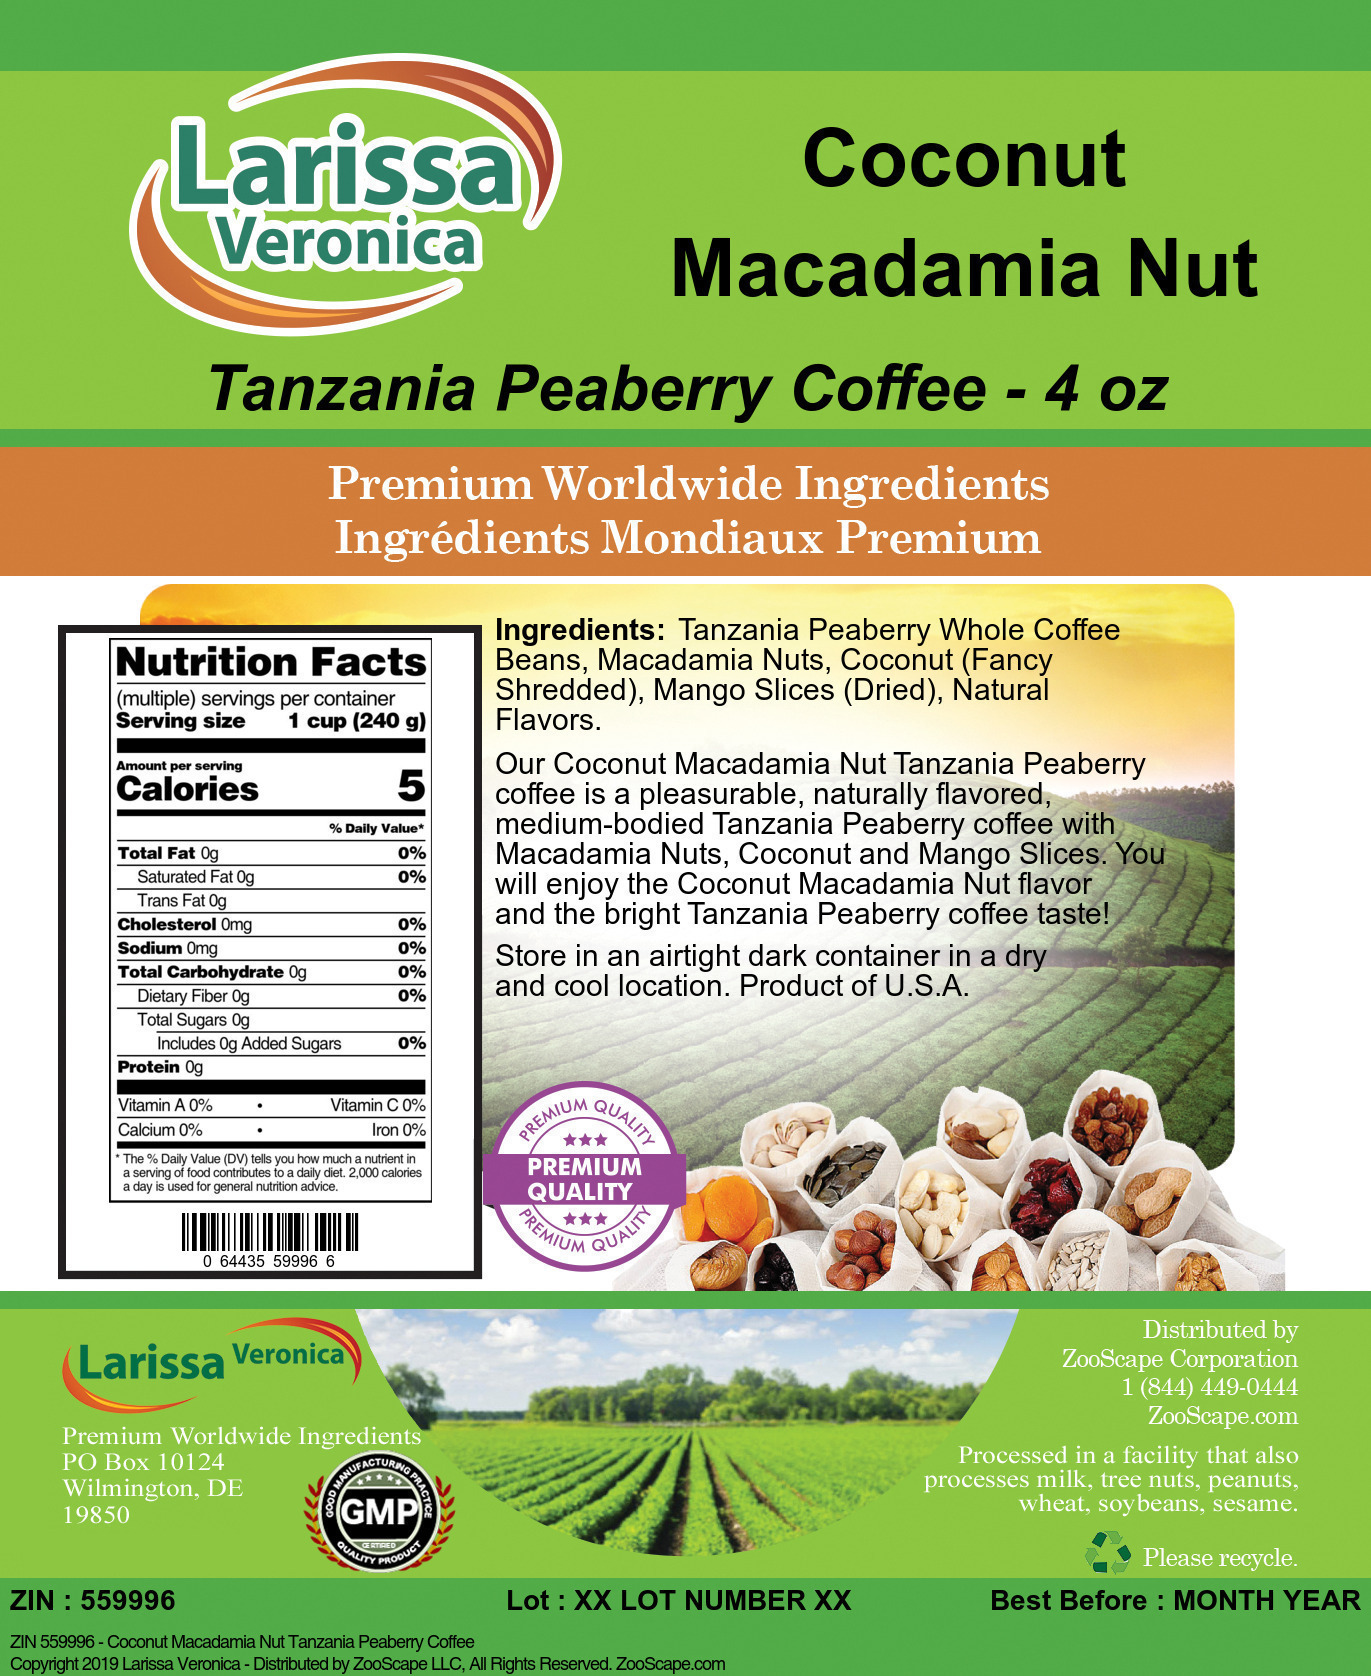 Coconut Macadamia Nut Tanzania Peaberry Coffee - Label